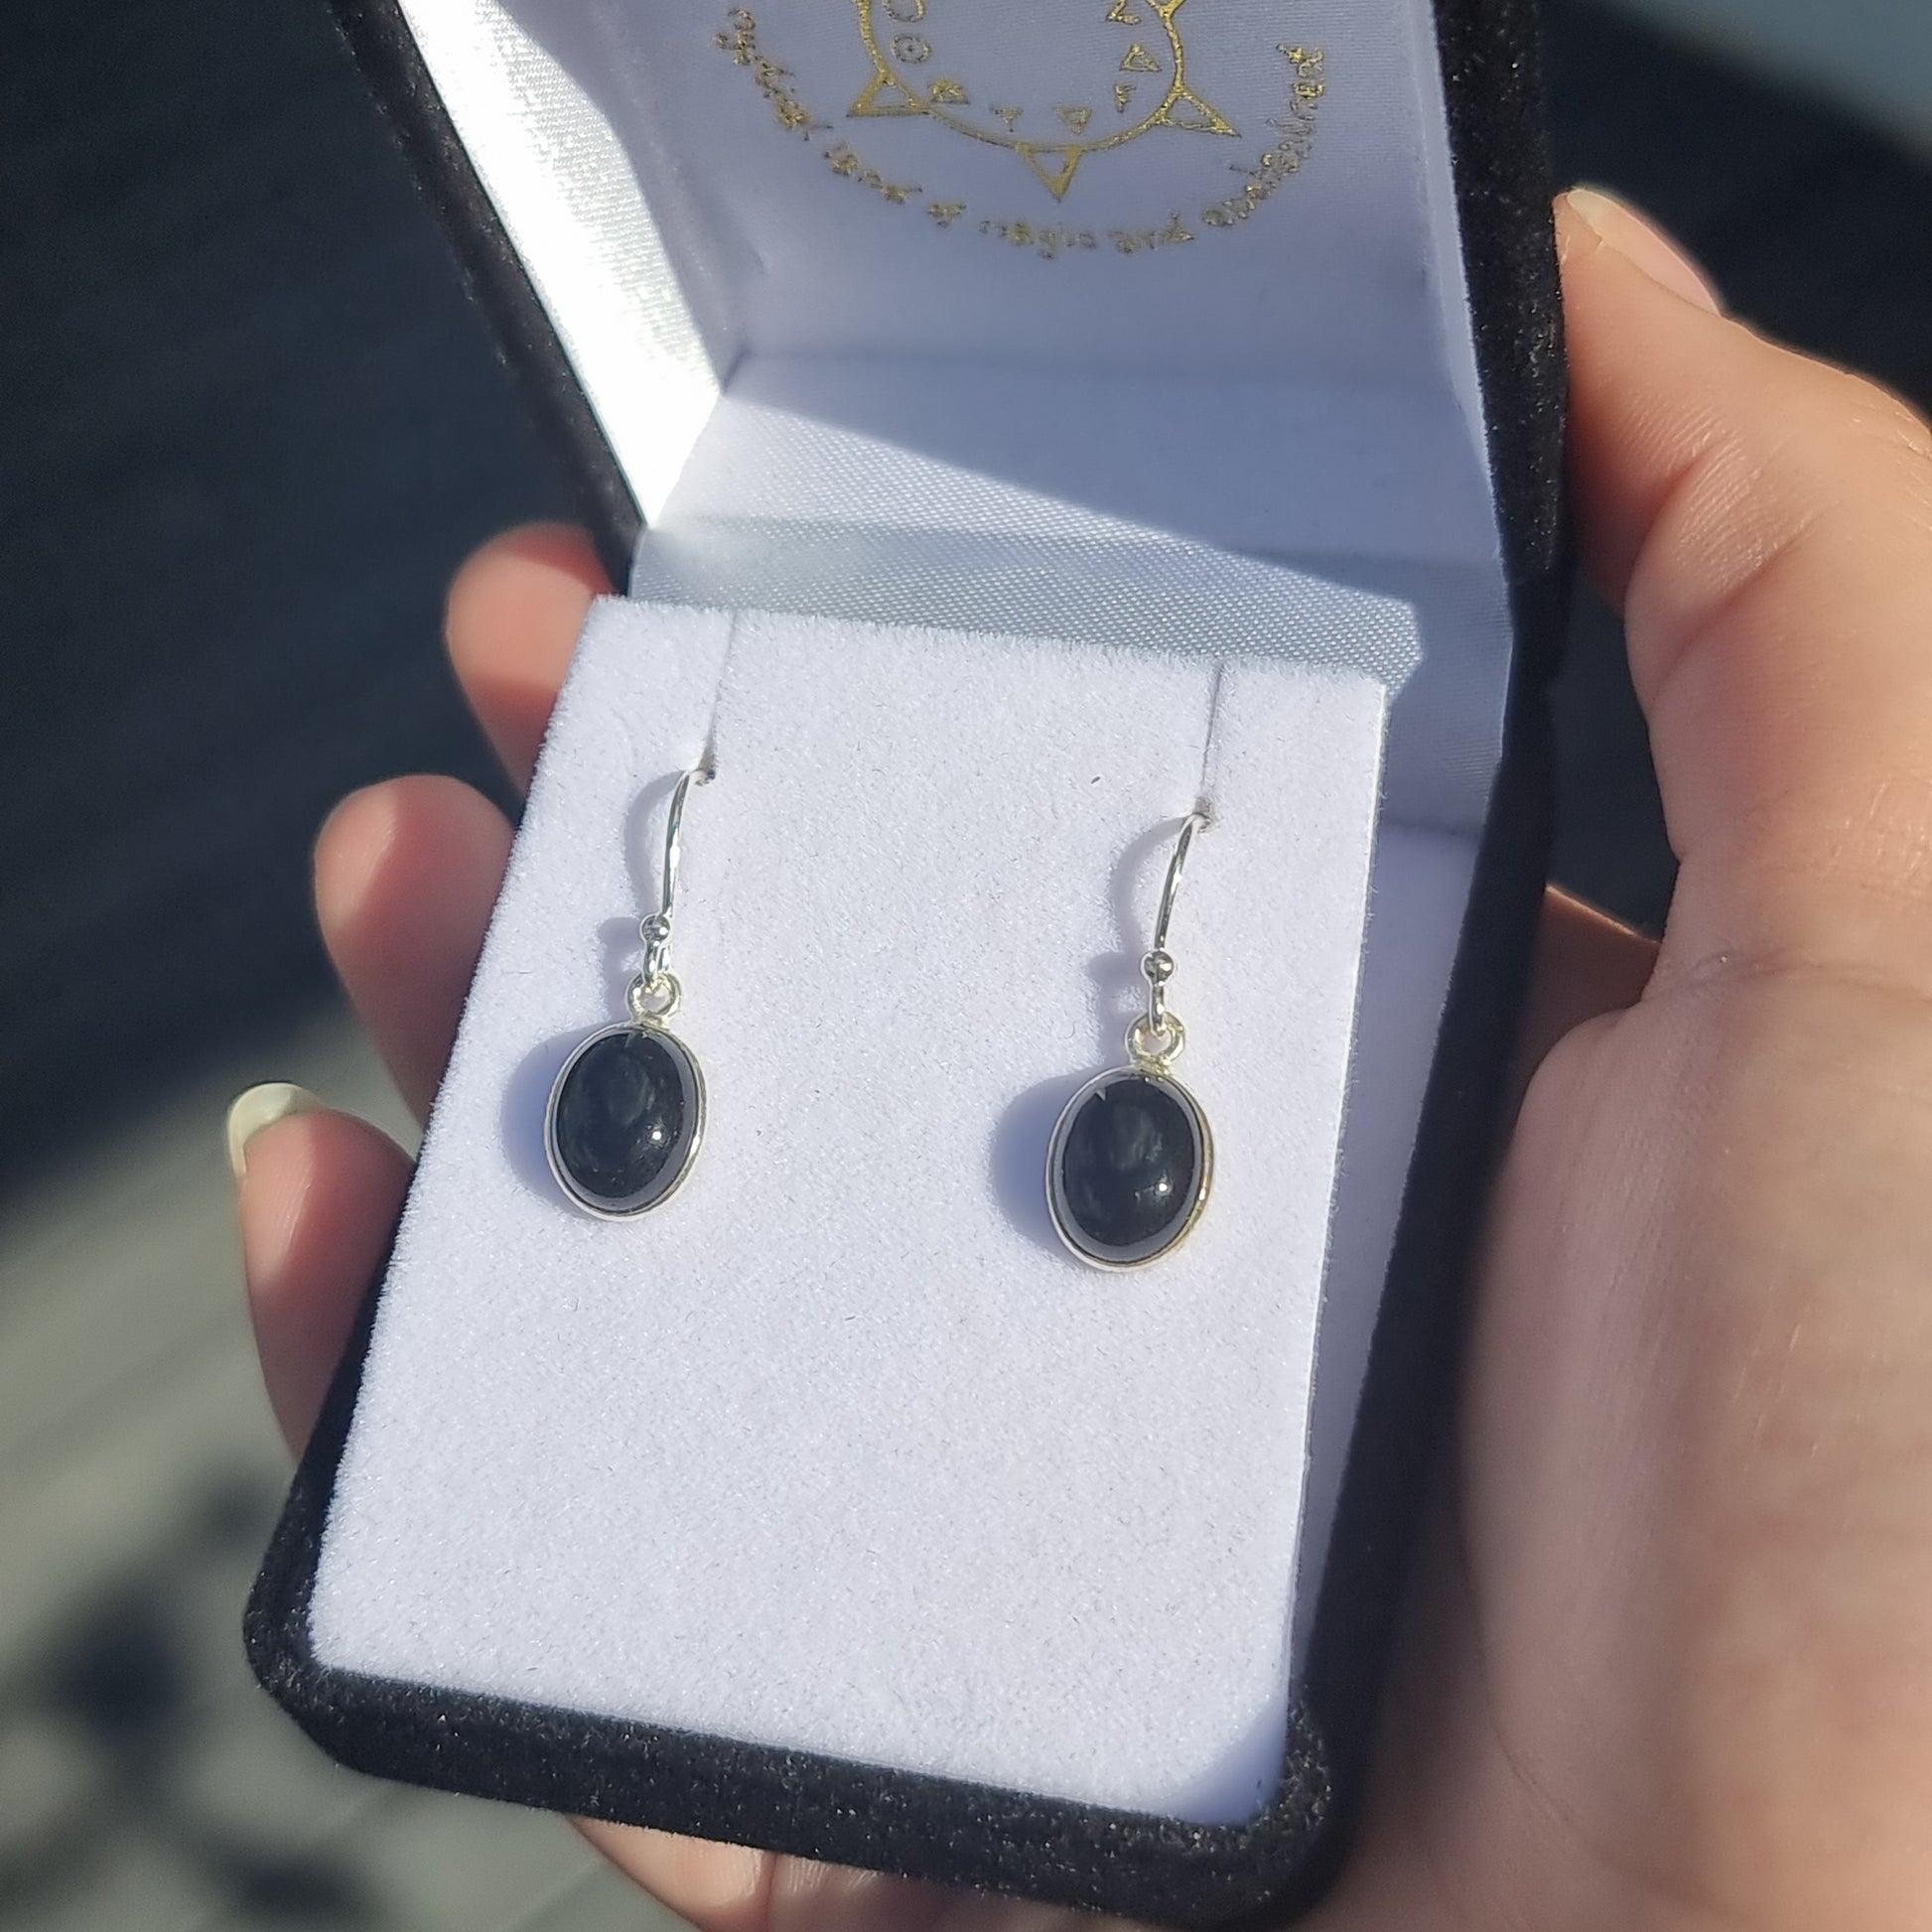 Onyx earrings - Rivendell Shop